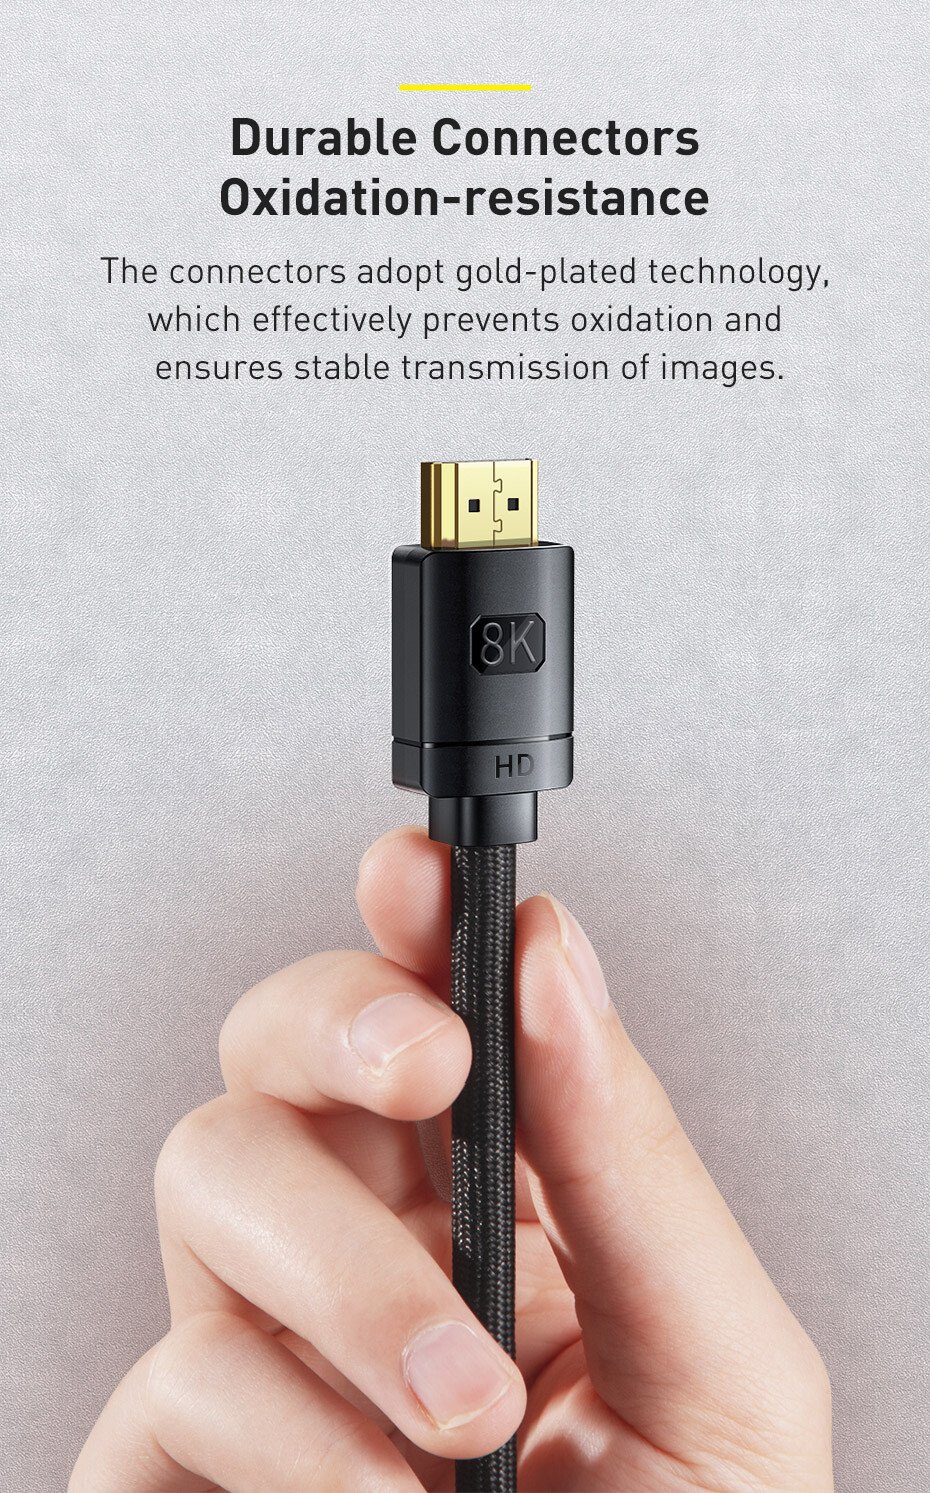 Cablu Video Baseus High Definition HDMI (T) la HDMI (T) 3m Negru thumb